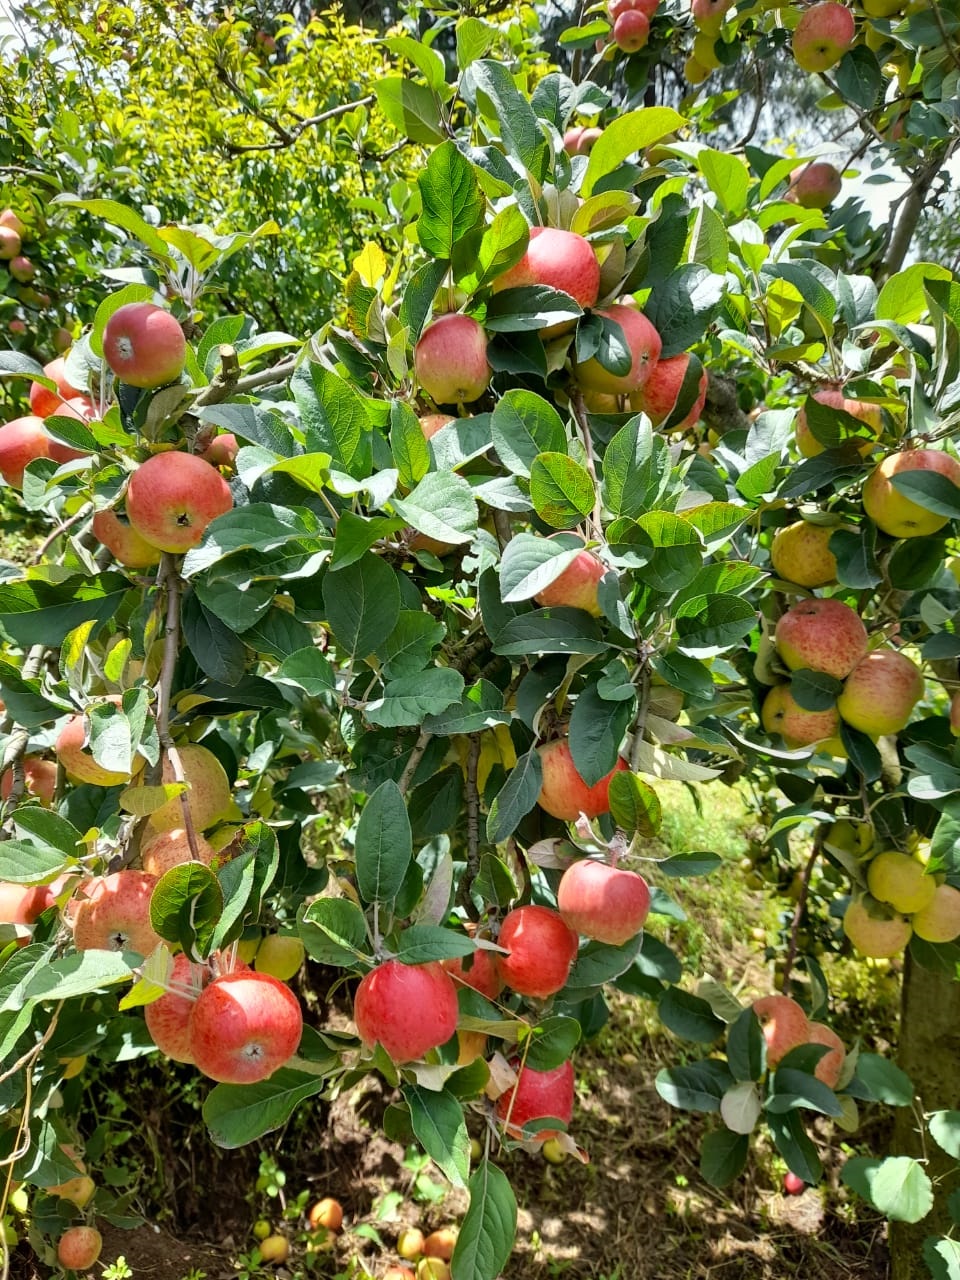 Abundant apples in Guatemala 🍎🍎🍎